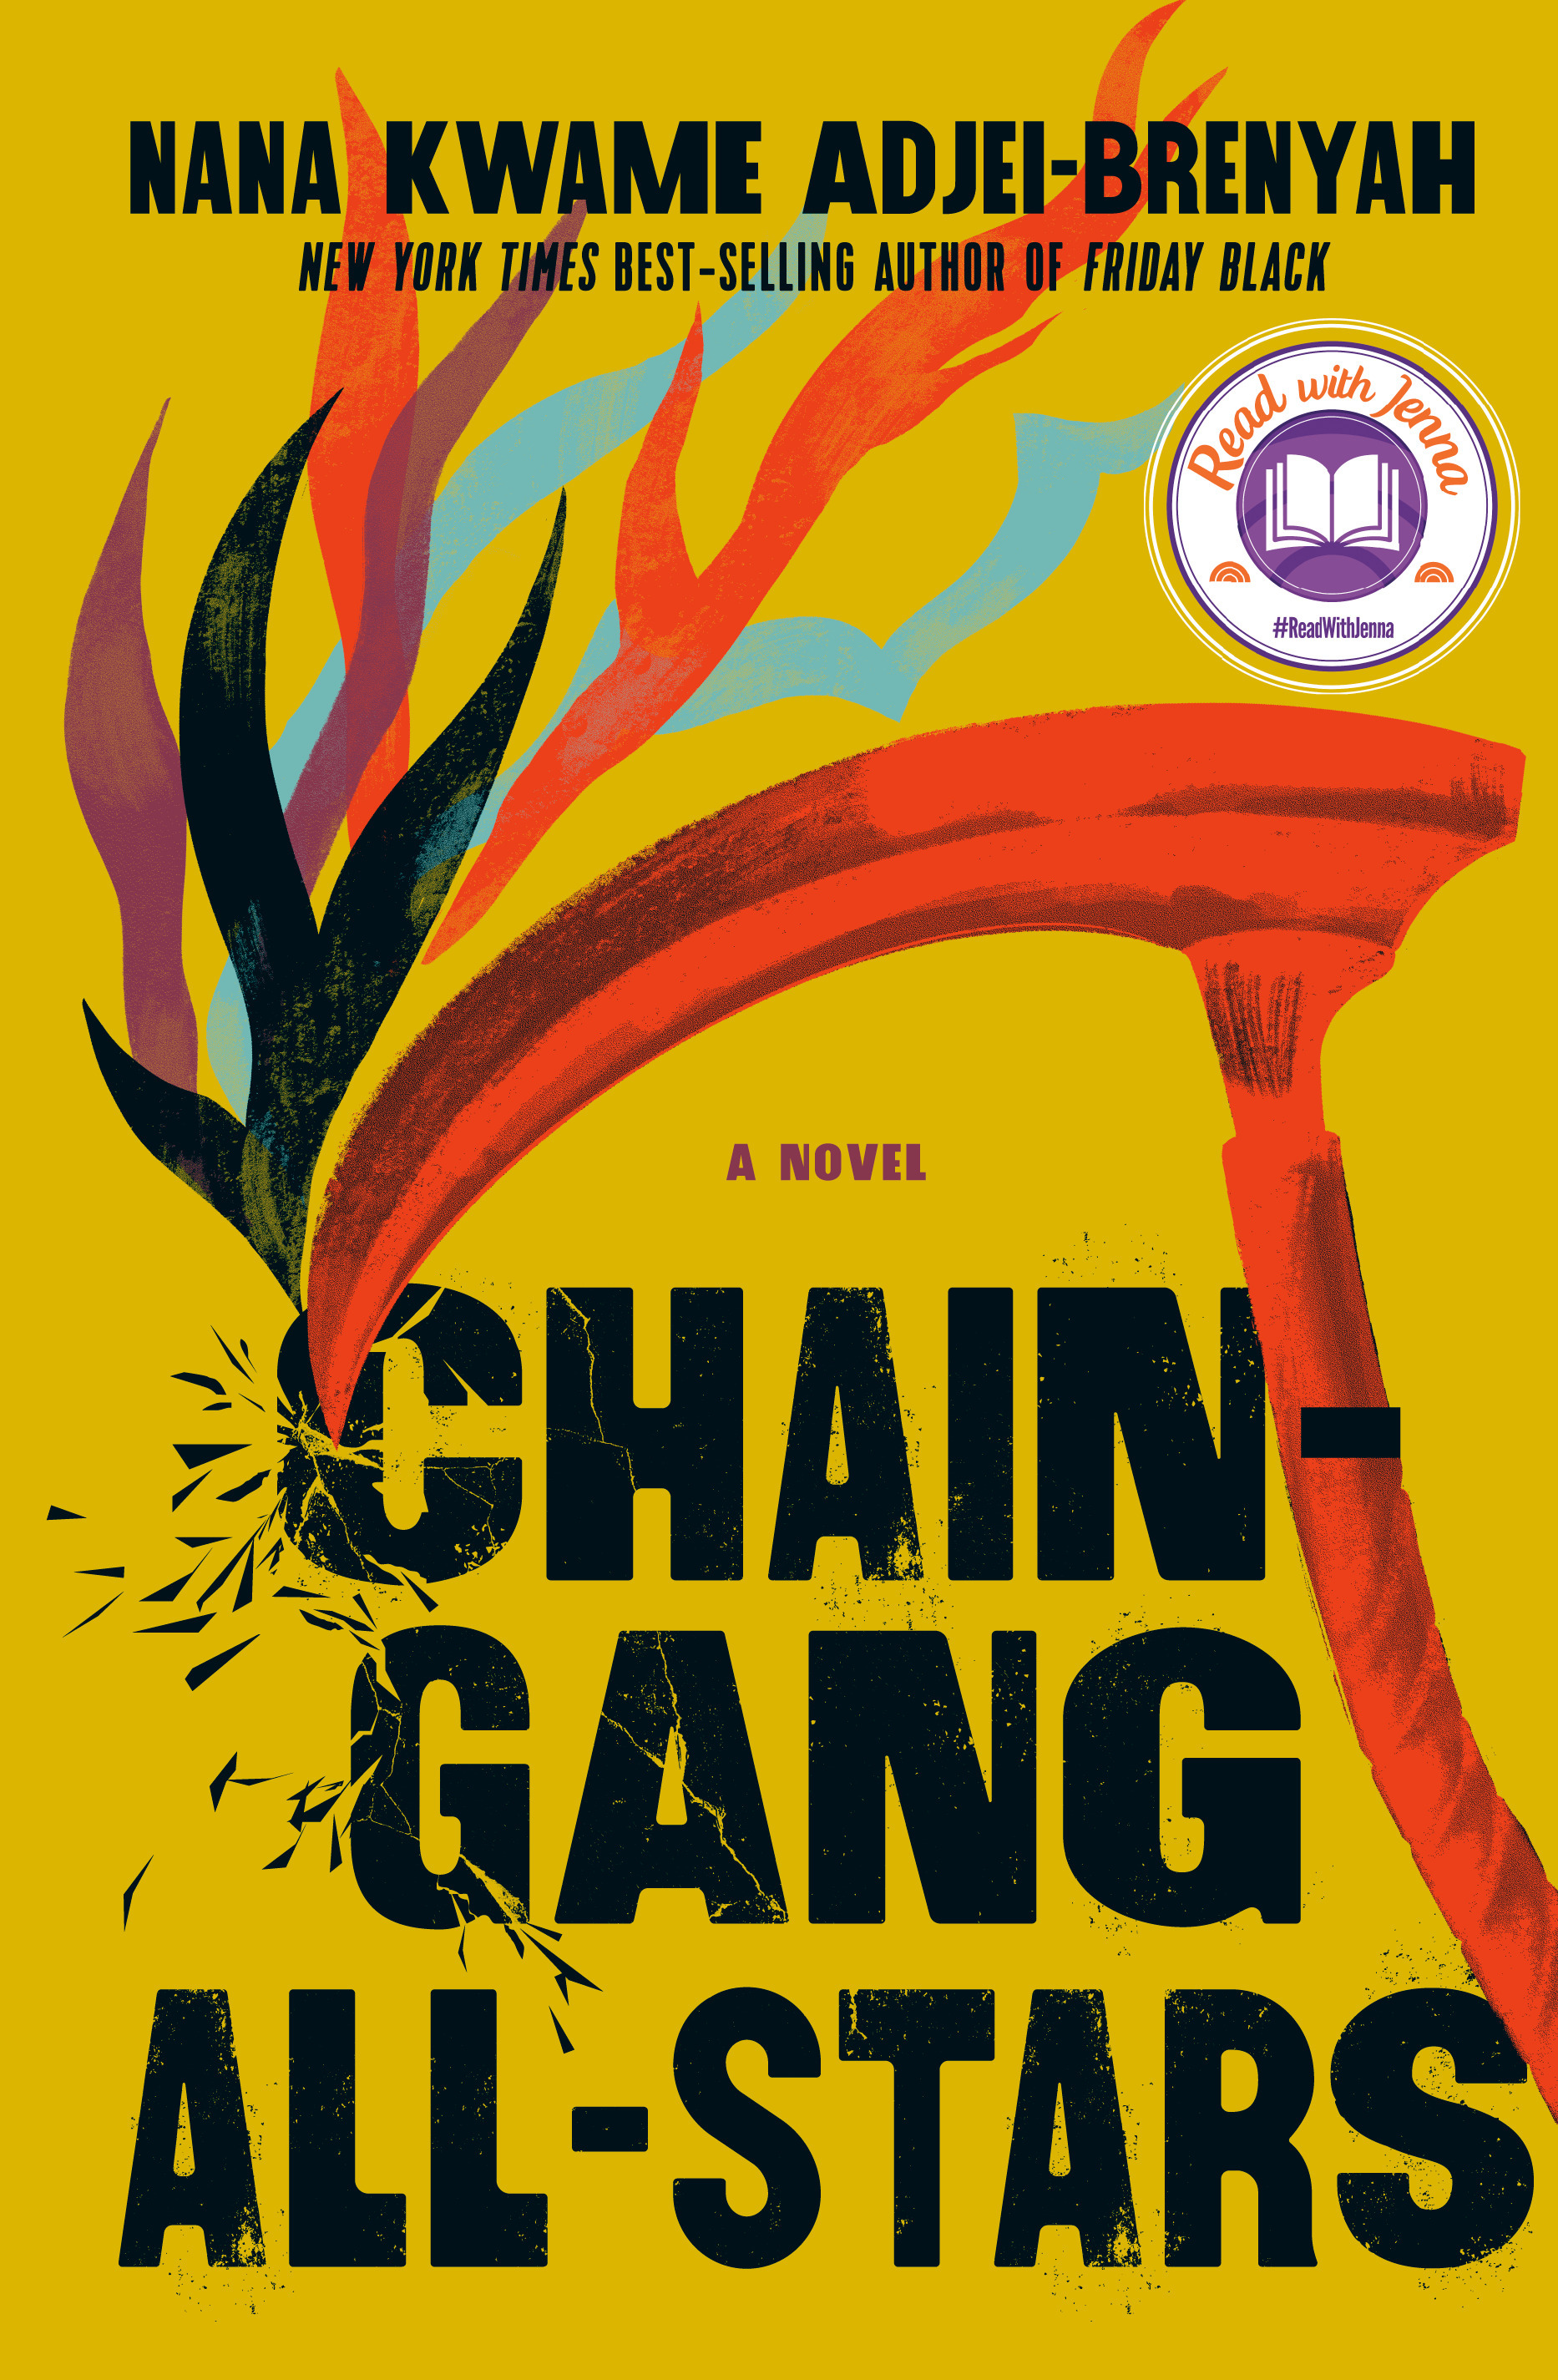 Cover for Chain-Gang All-Stars by Nana Kwame Adjei-Brenyah.